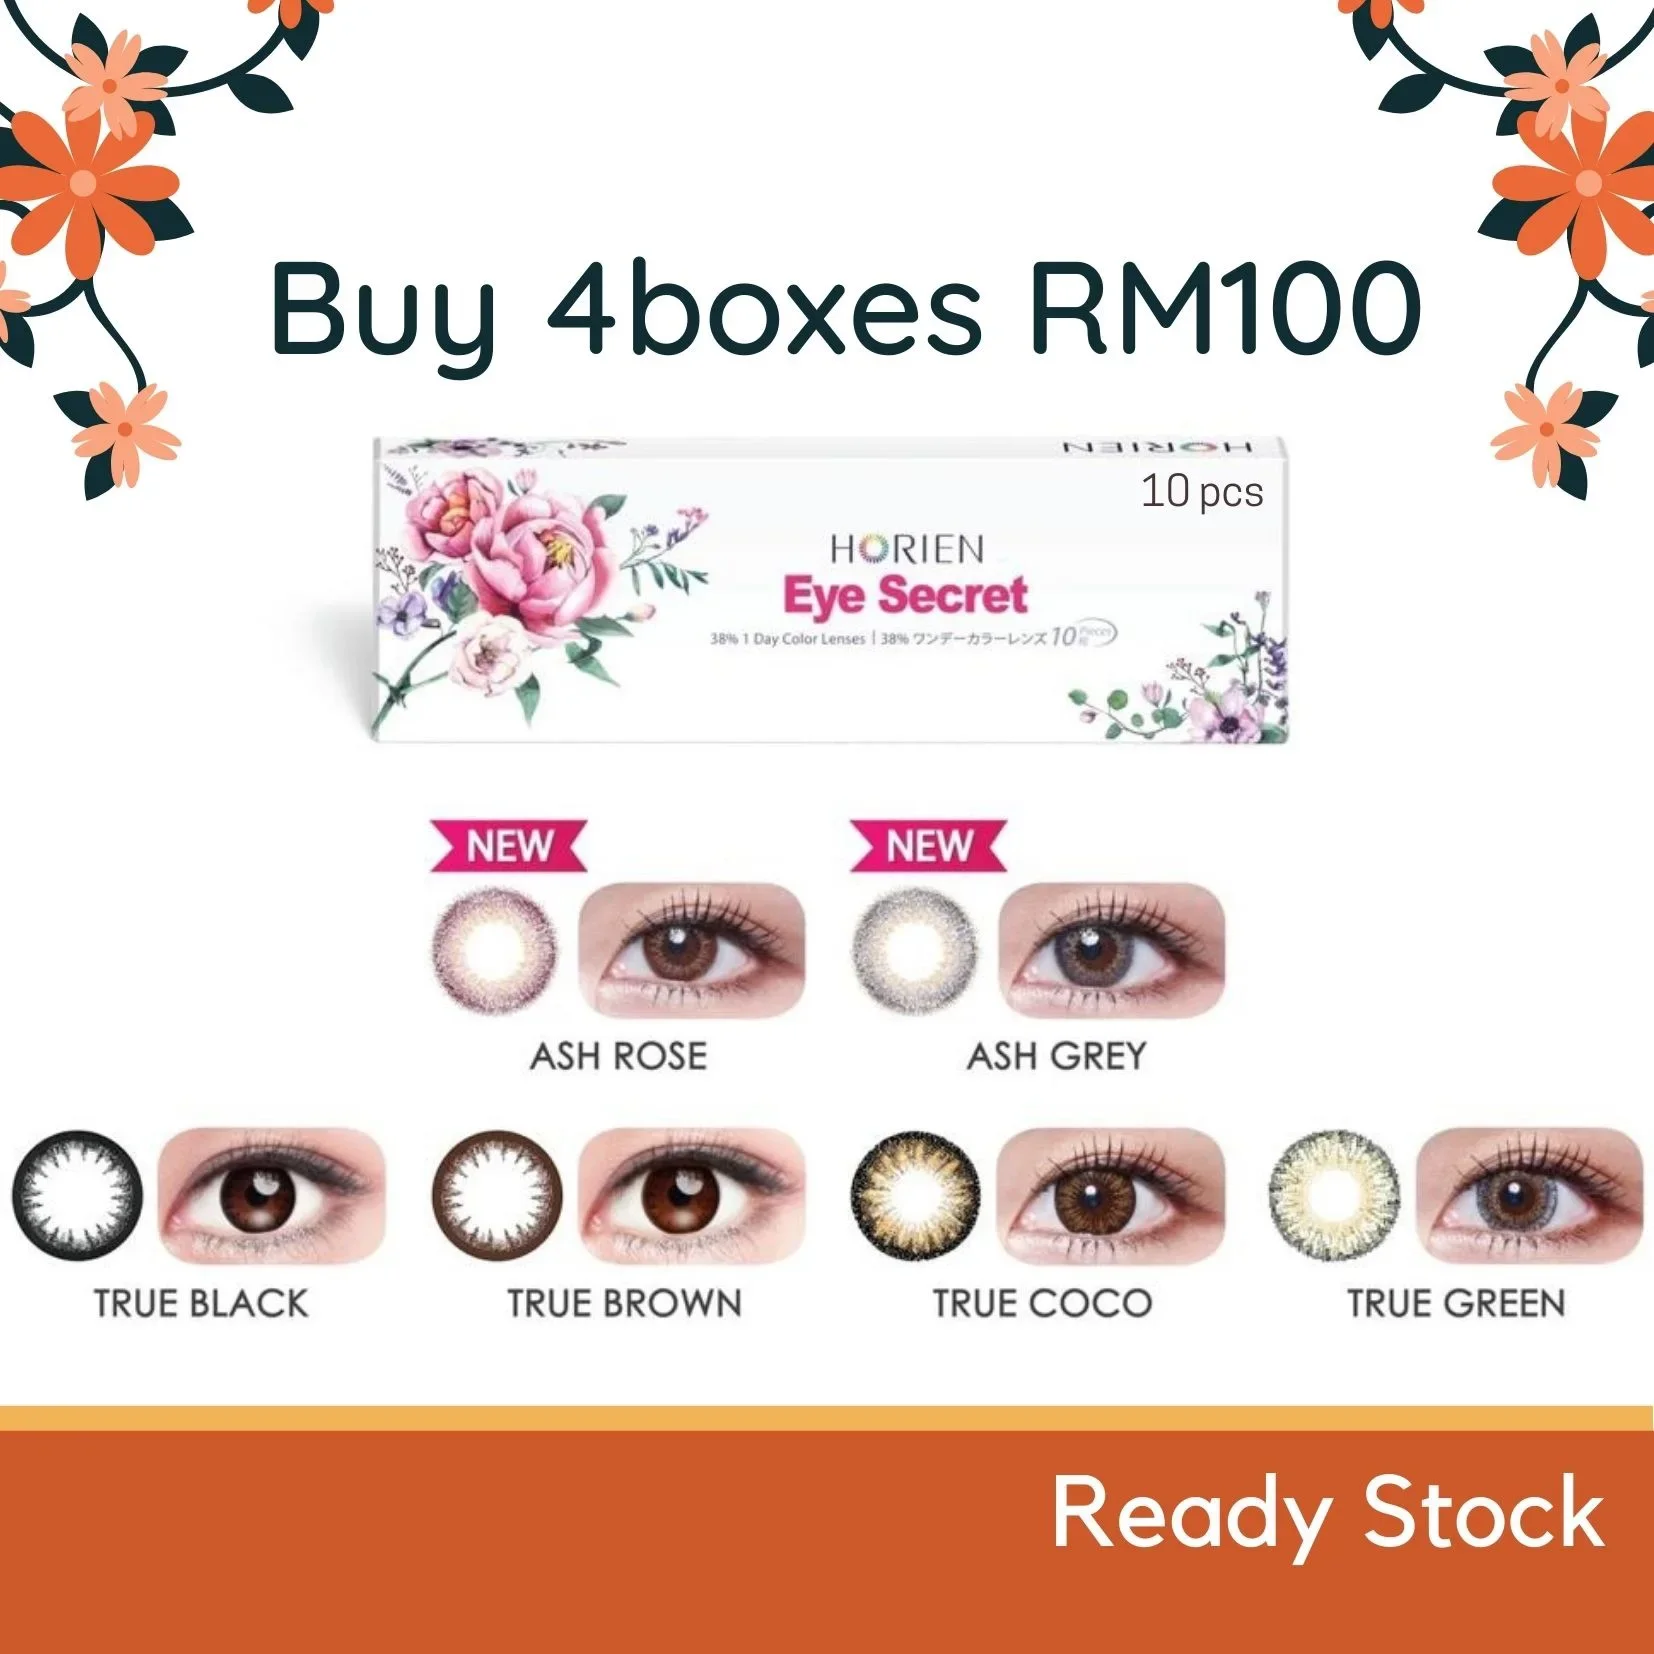 Horien Eye Secret Daily Color Contact Lenses 10PSC/Box